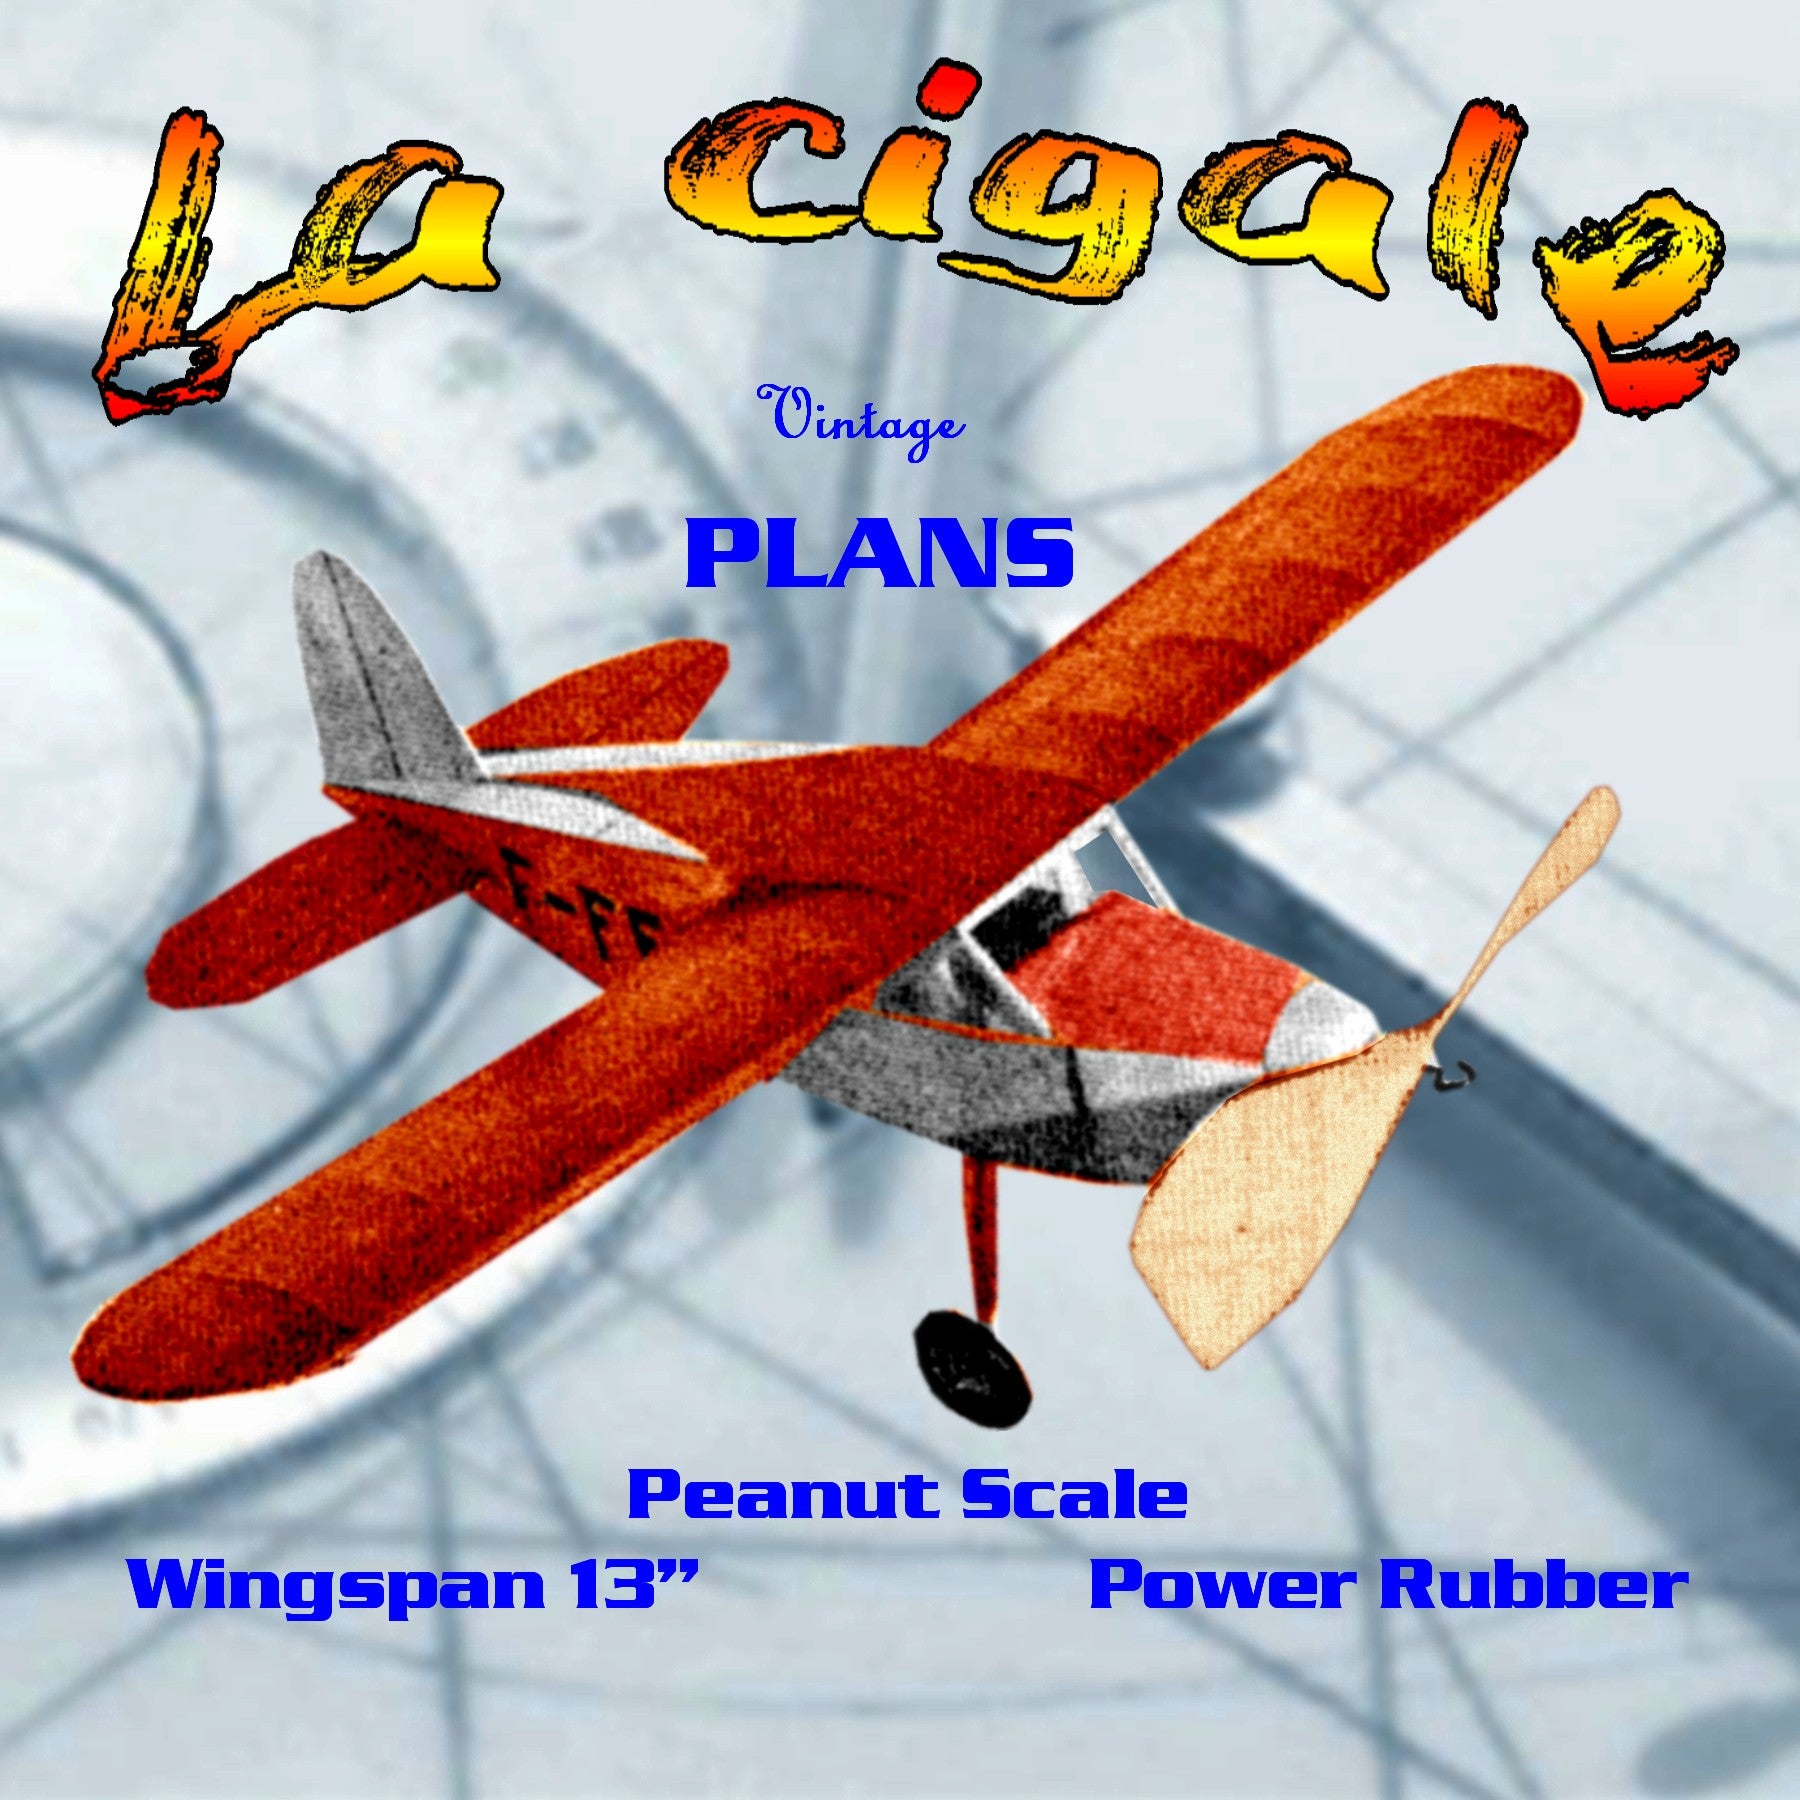 full size printed plans peanut scale "la cigale" paul aubert's "grasshopper